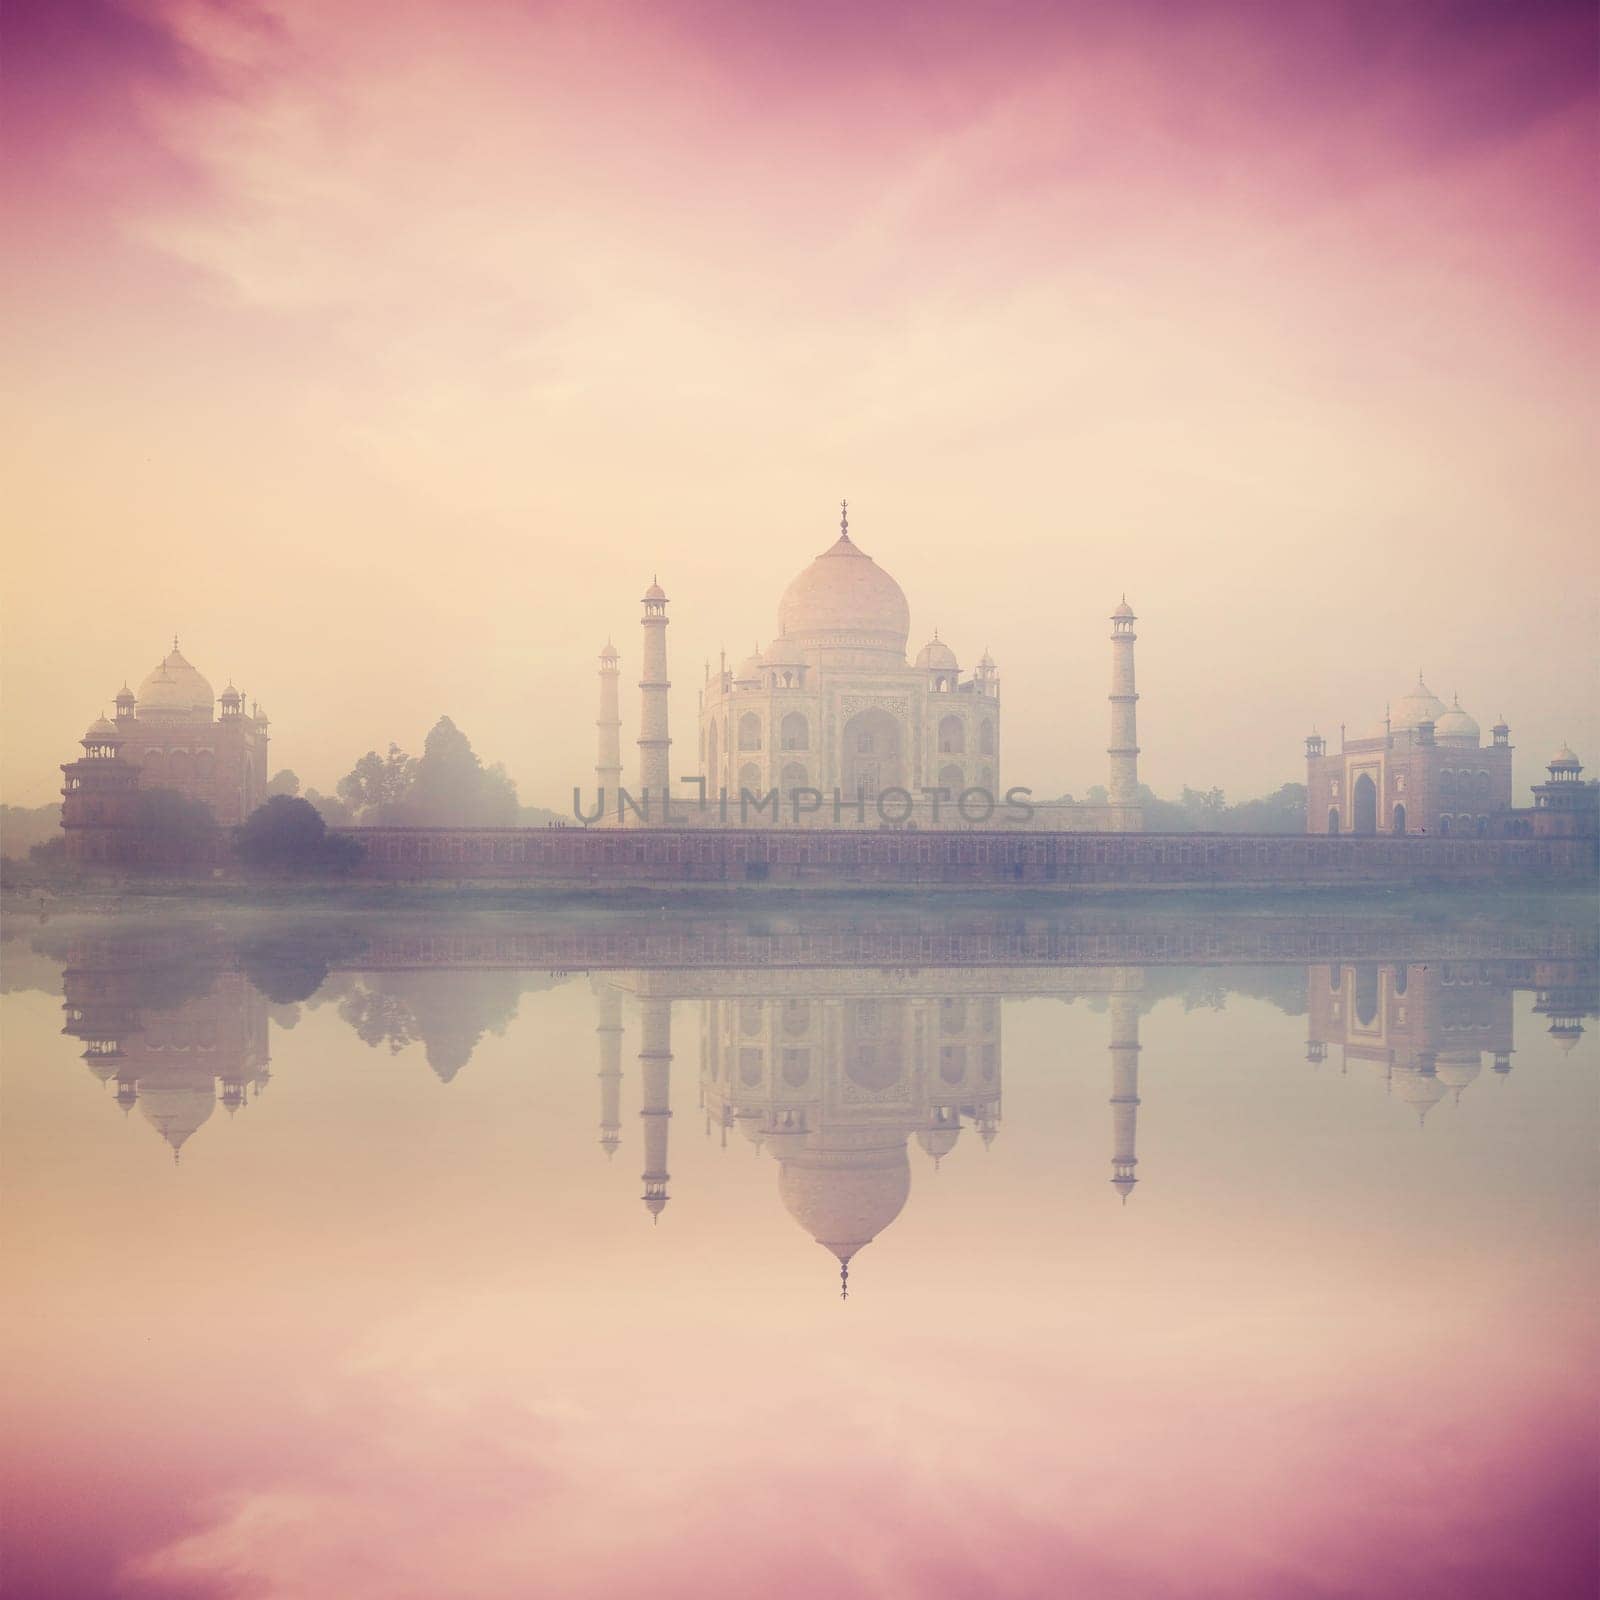 Vintage retro hipster style image of Taj Mahal on sunrise sunset reflection in Yamuna river panorama in fog, Indian Symbol - India travel background. Agra, Uttar Pradesh, India